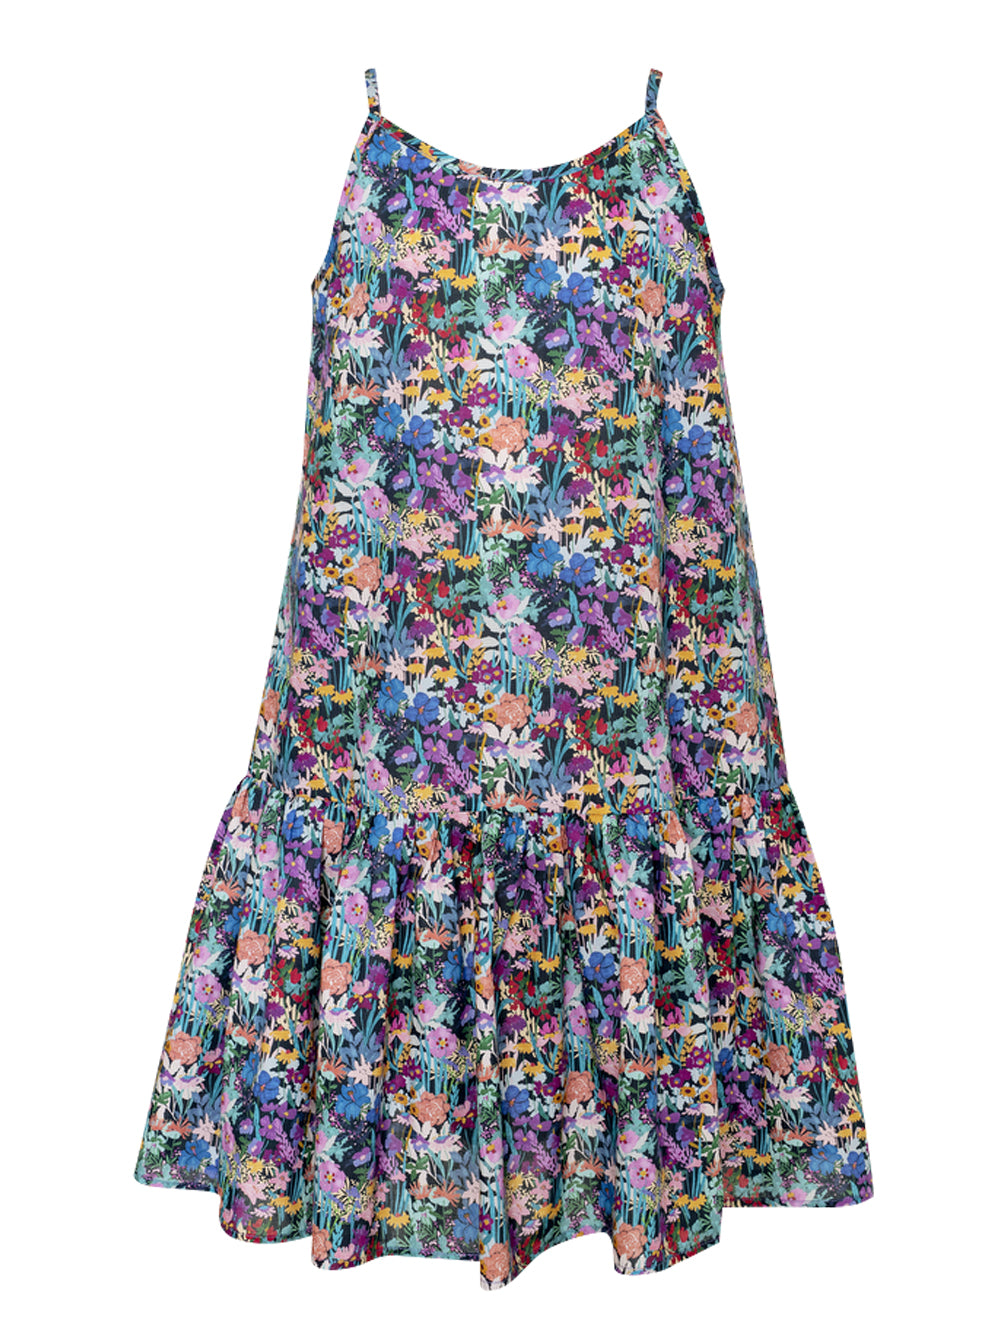 PREORDER: Printed Slip Dress